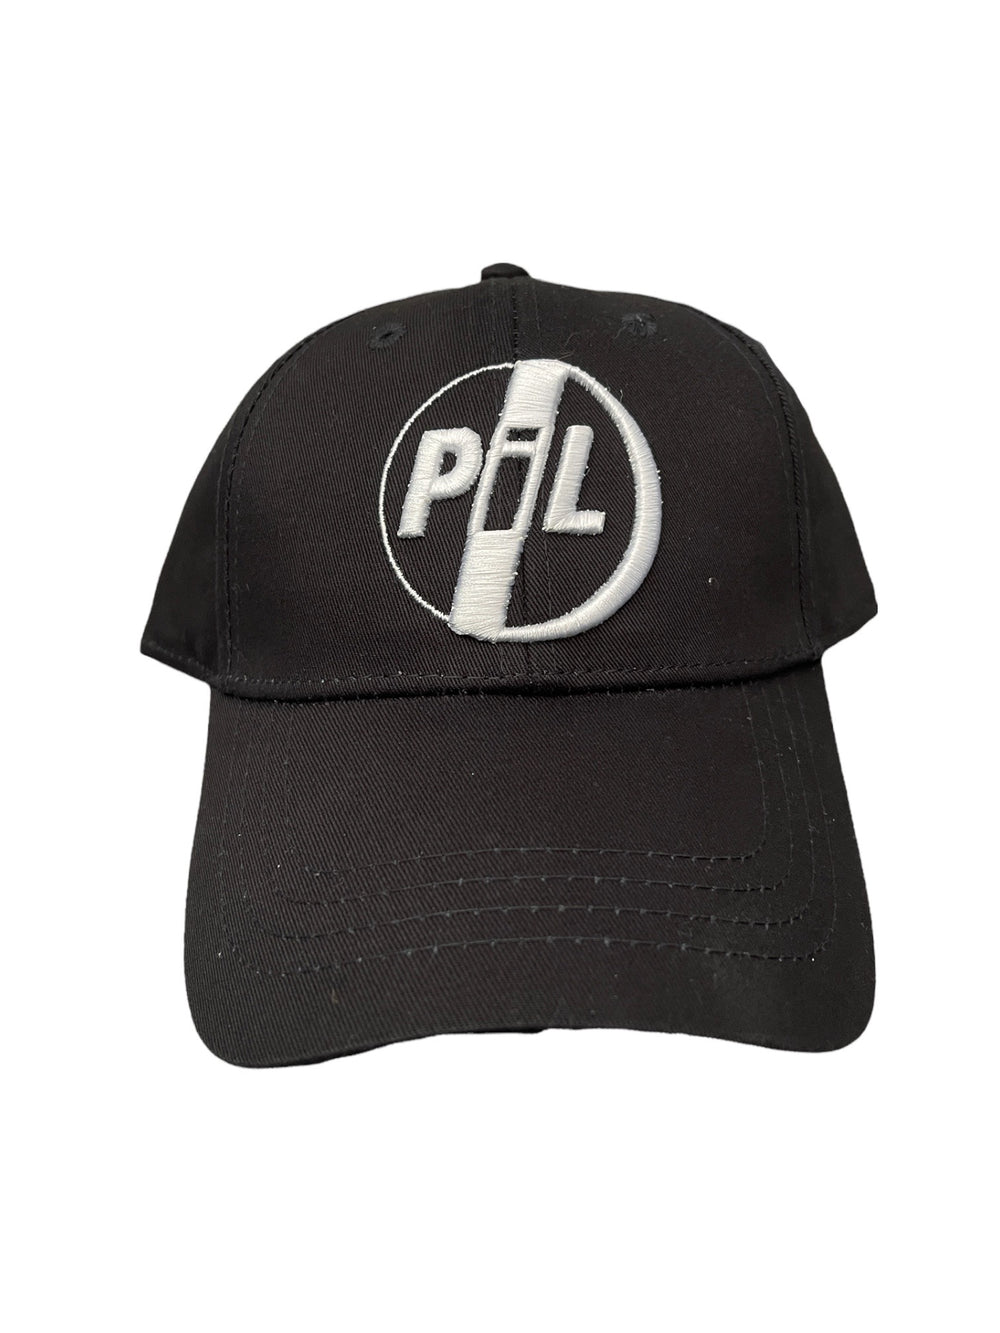 PIL Logo Official Peak Cap Adjustable Brand New Sex Pistols John Lydon